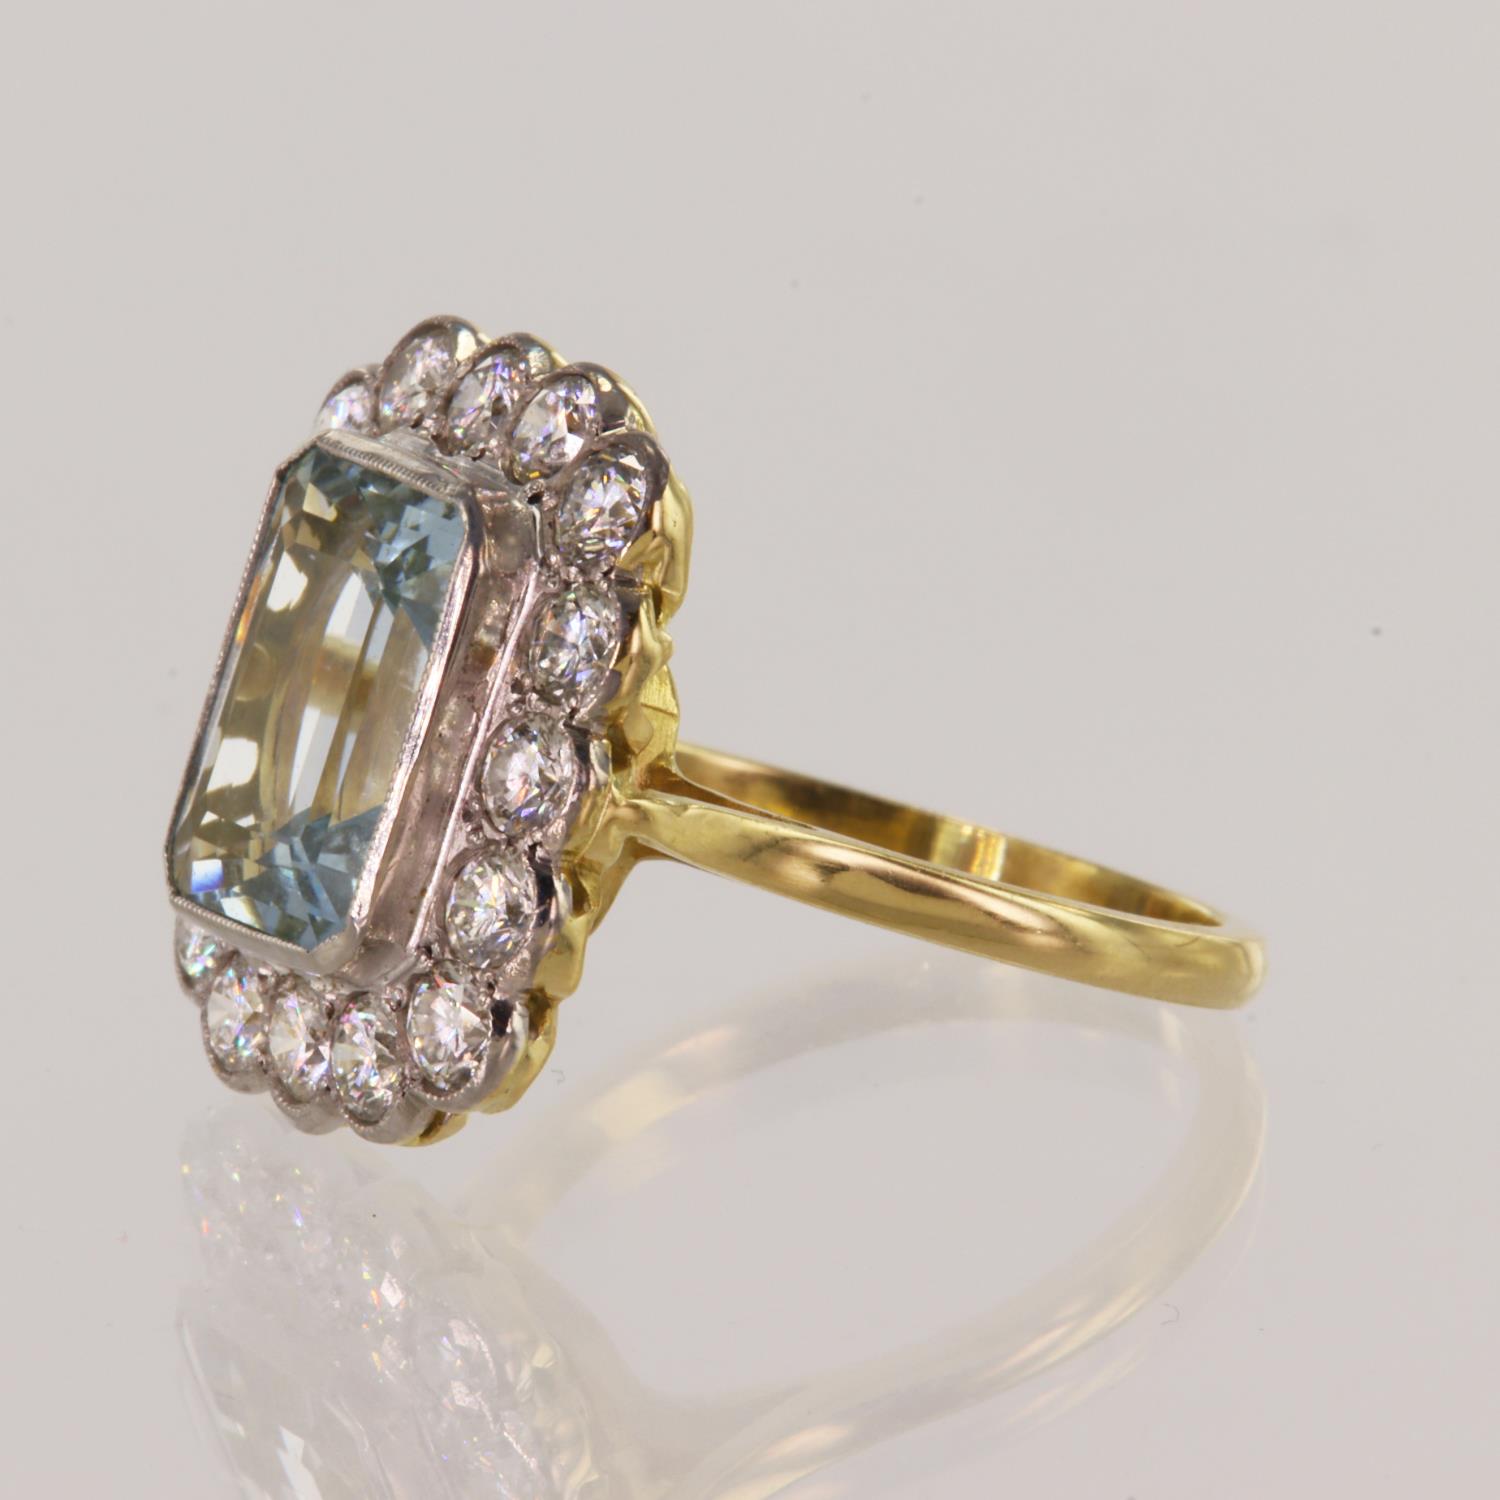 Yellow gold (tests 18ct) diamond and aquamarine cocktail ring, octagonal aquamarine measures 11mm - Image 2 of 2